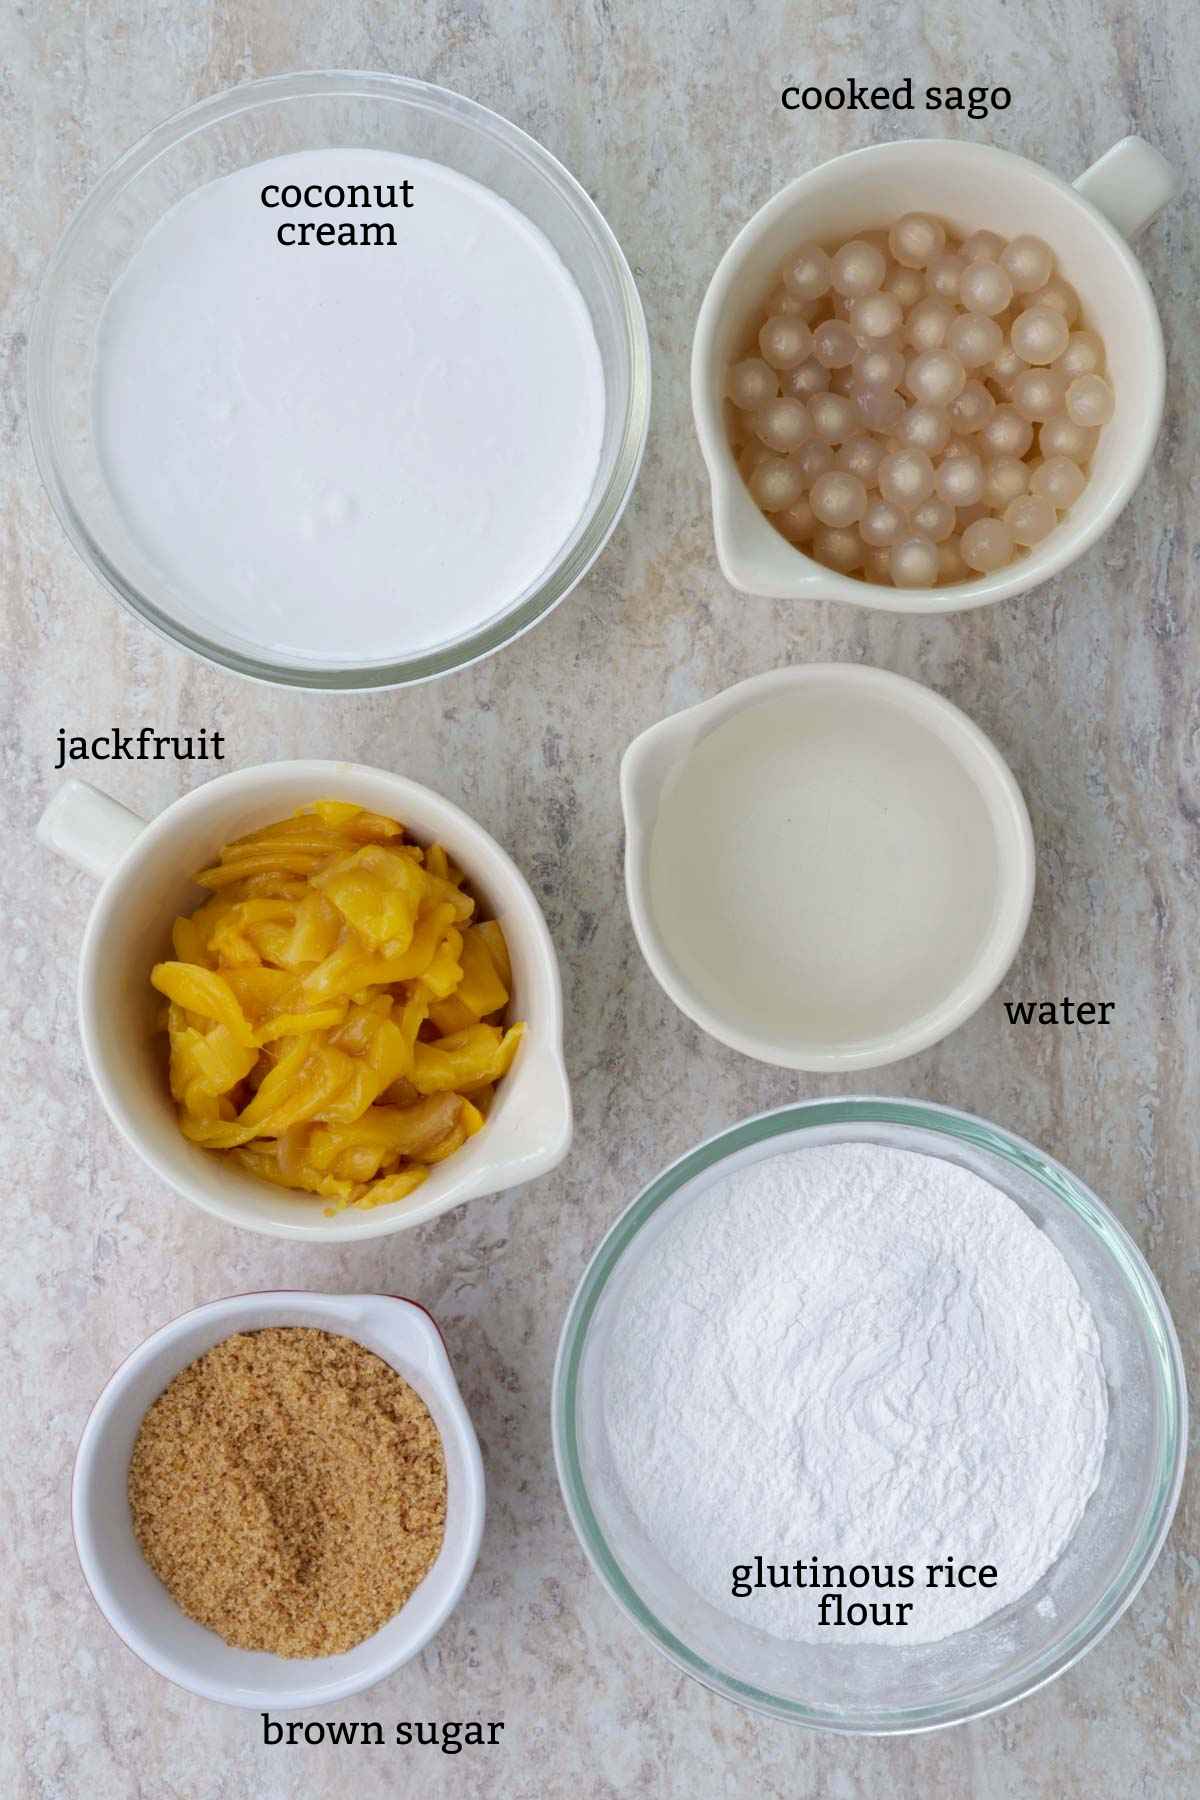 Ingredients for palitaw sa latik.